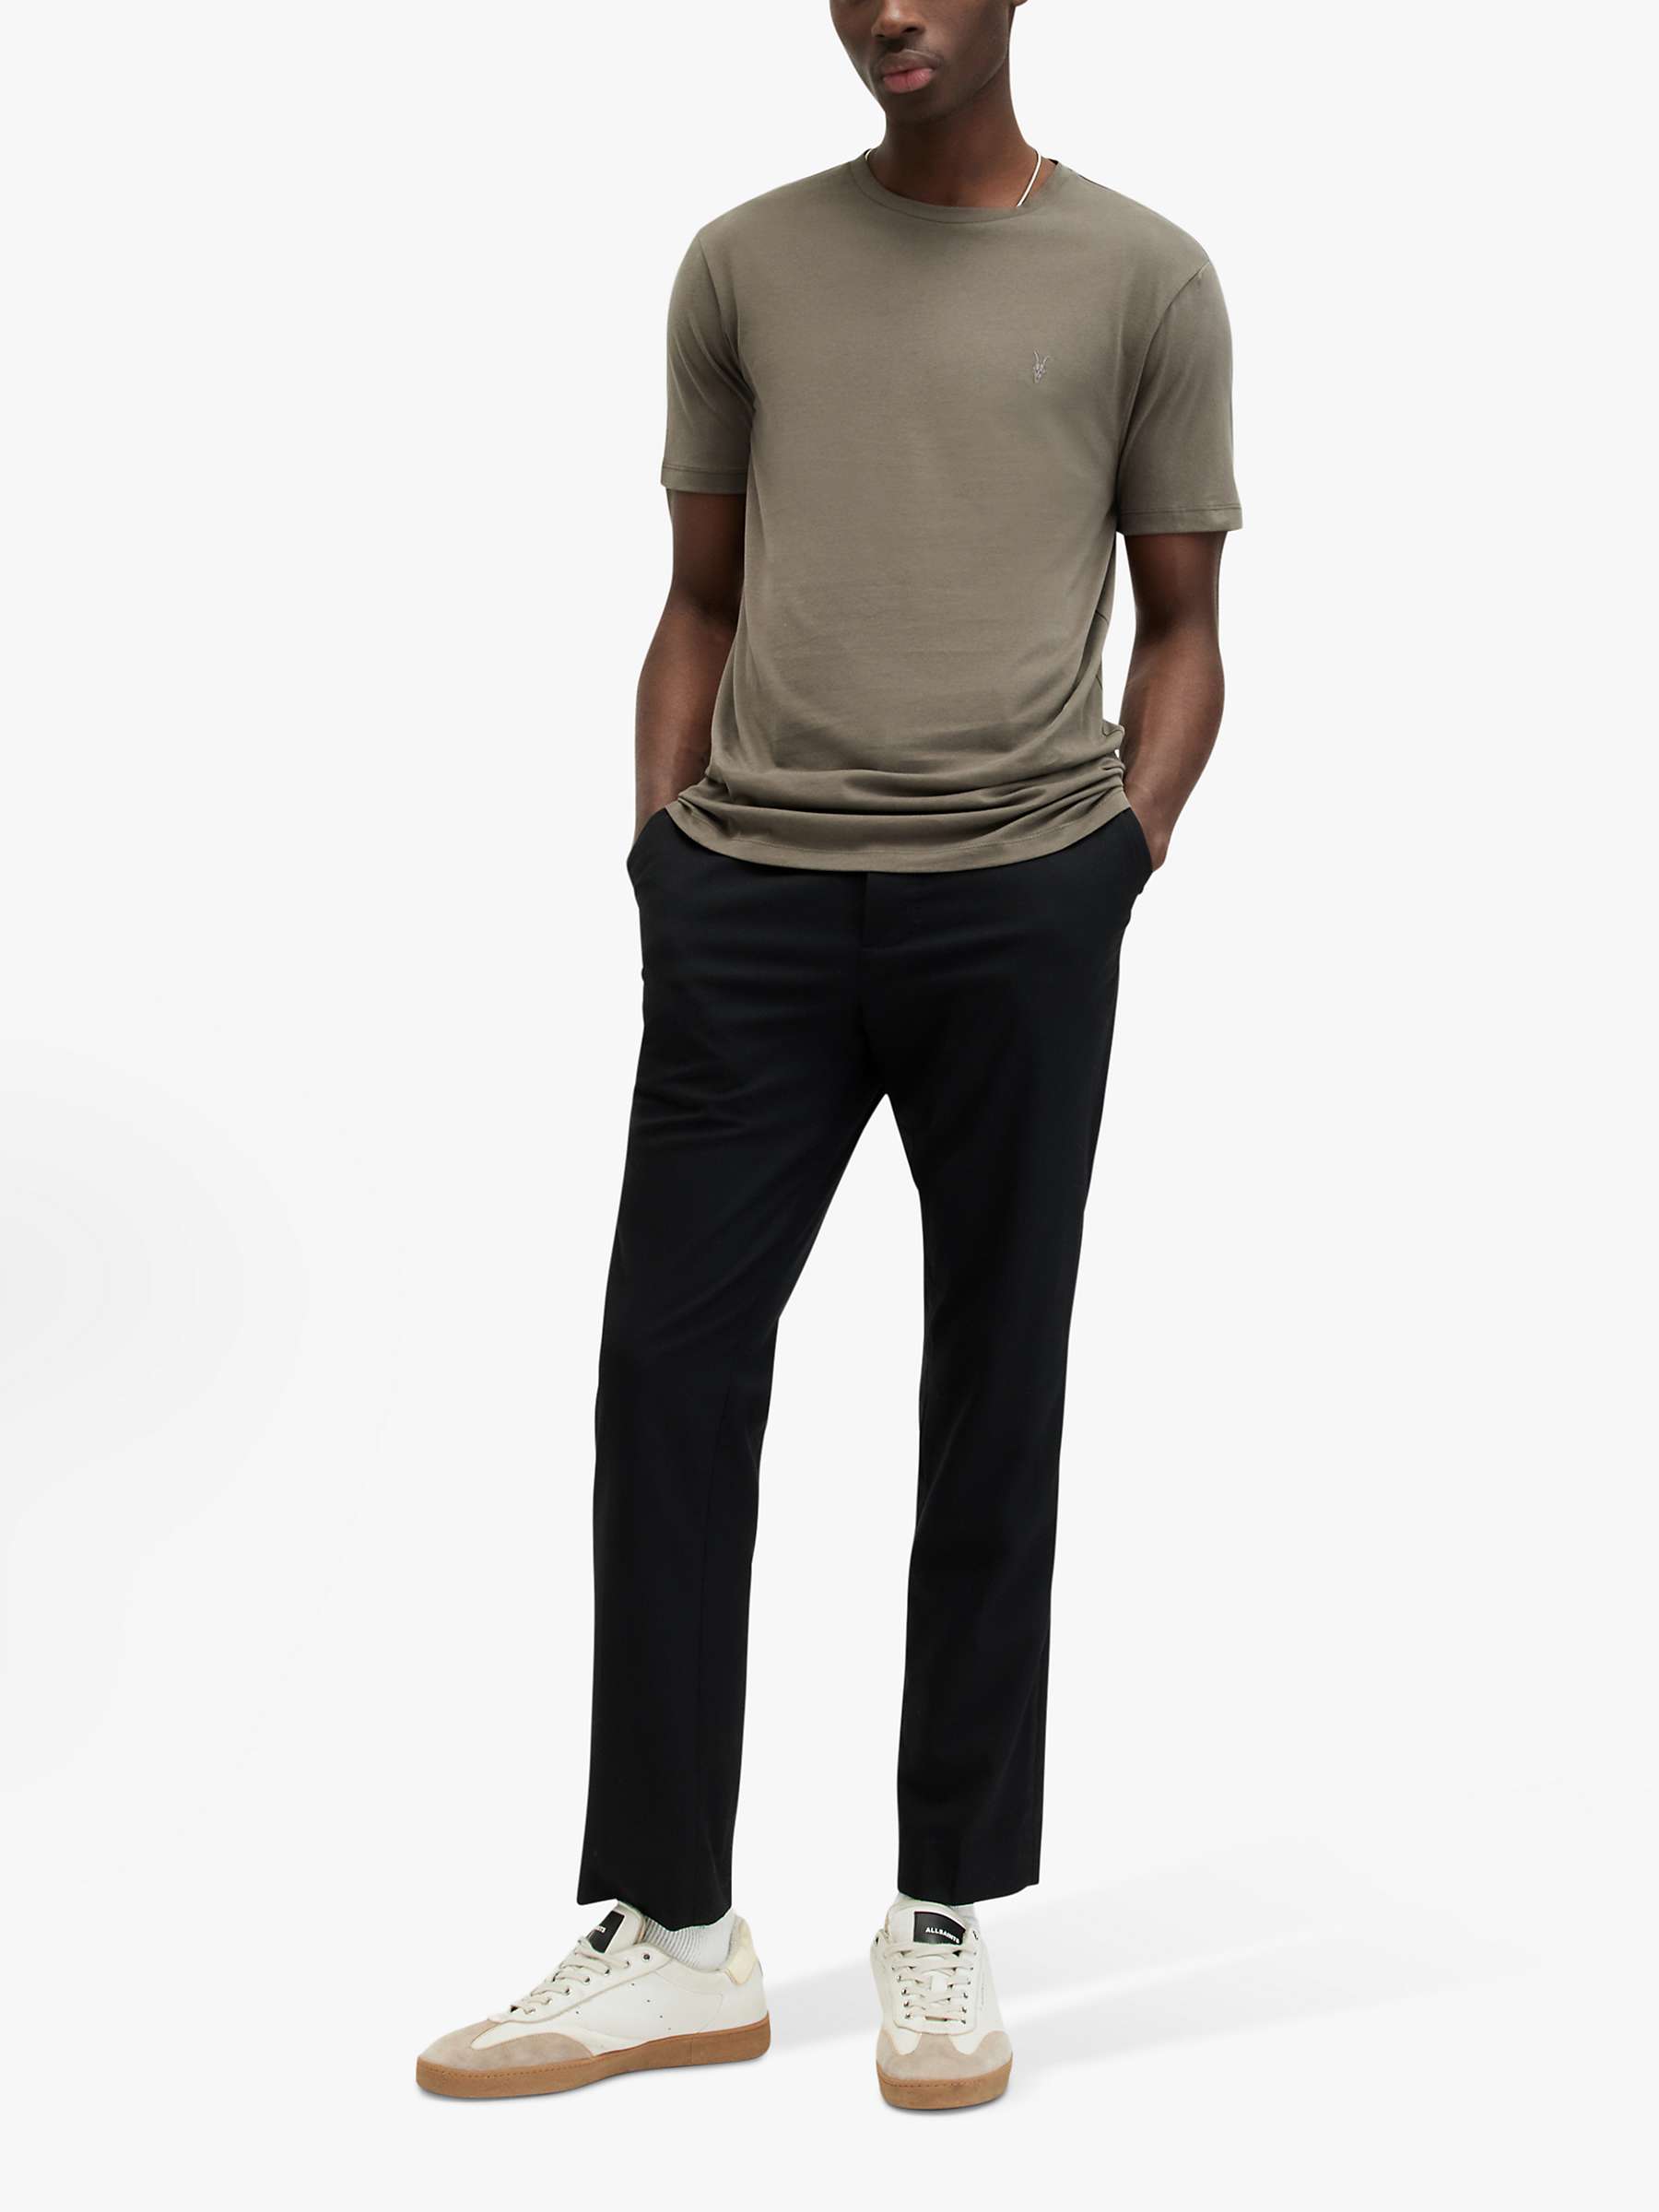 Buy AllSaints Brace Short Sleeve Crew T-Shirt, Pack of 3 Online at johnlewis.com